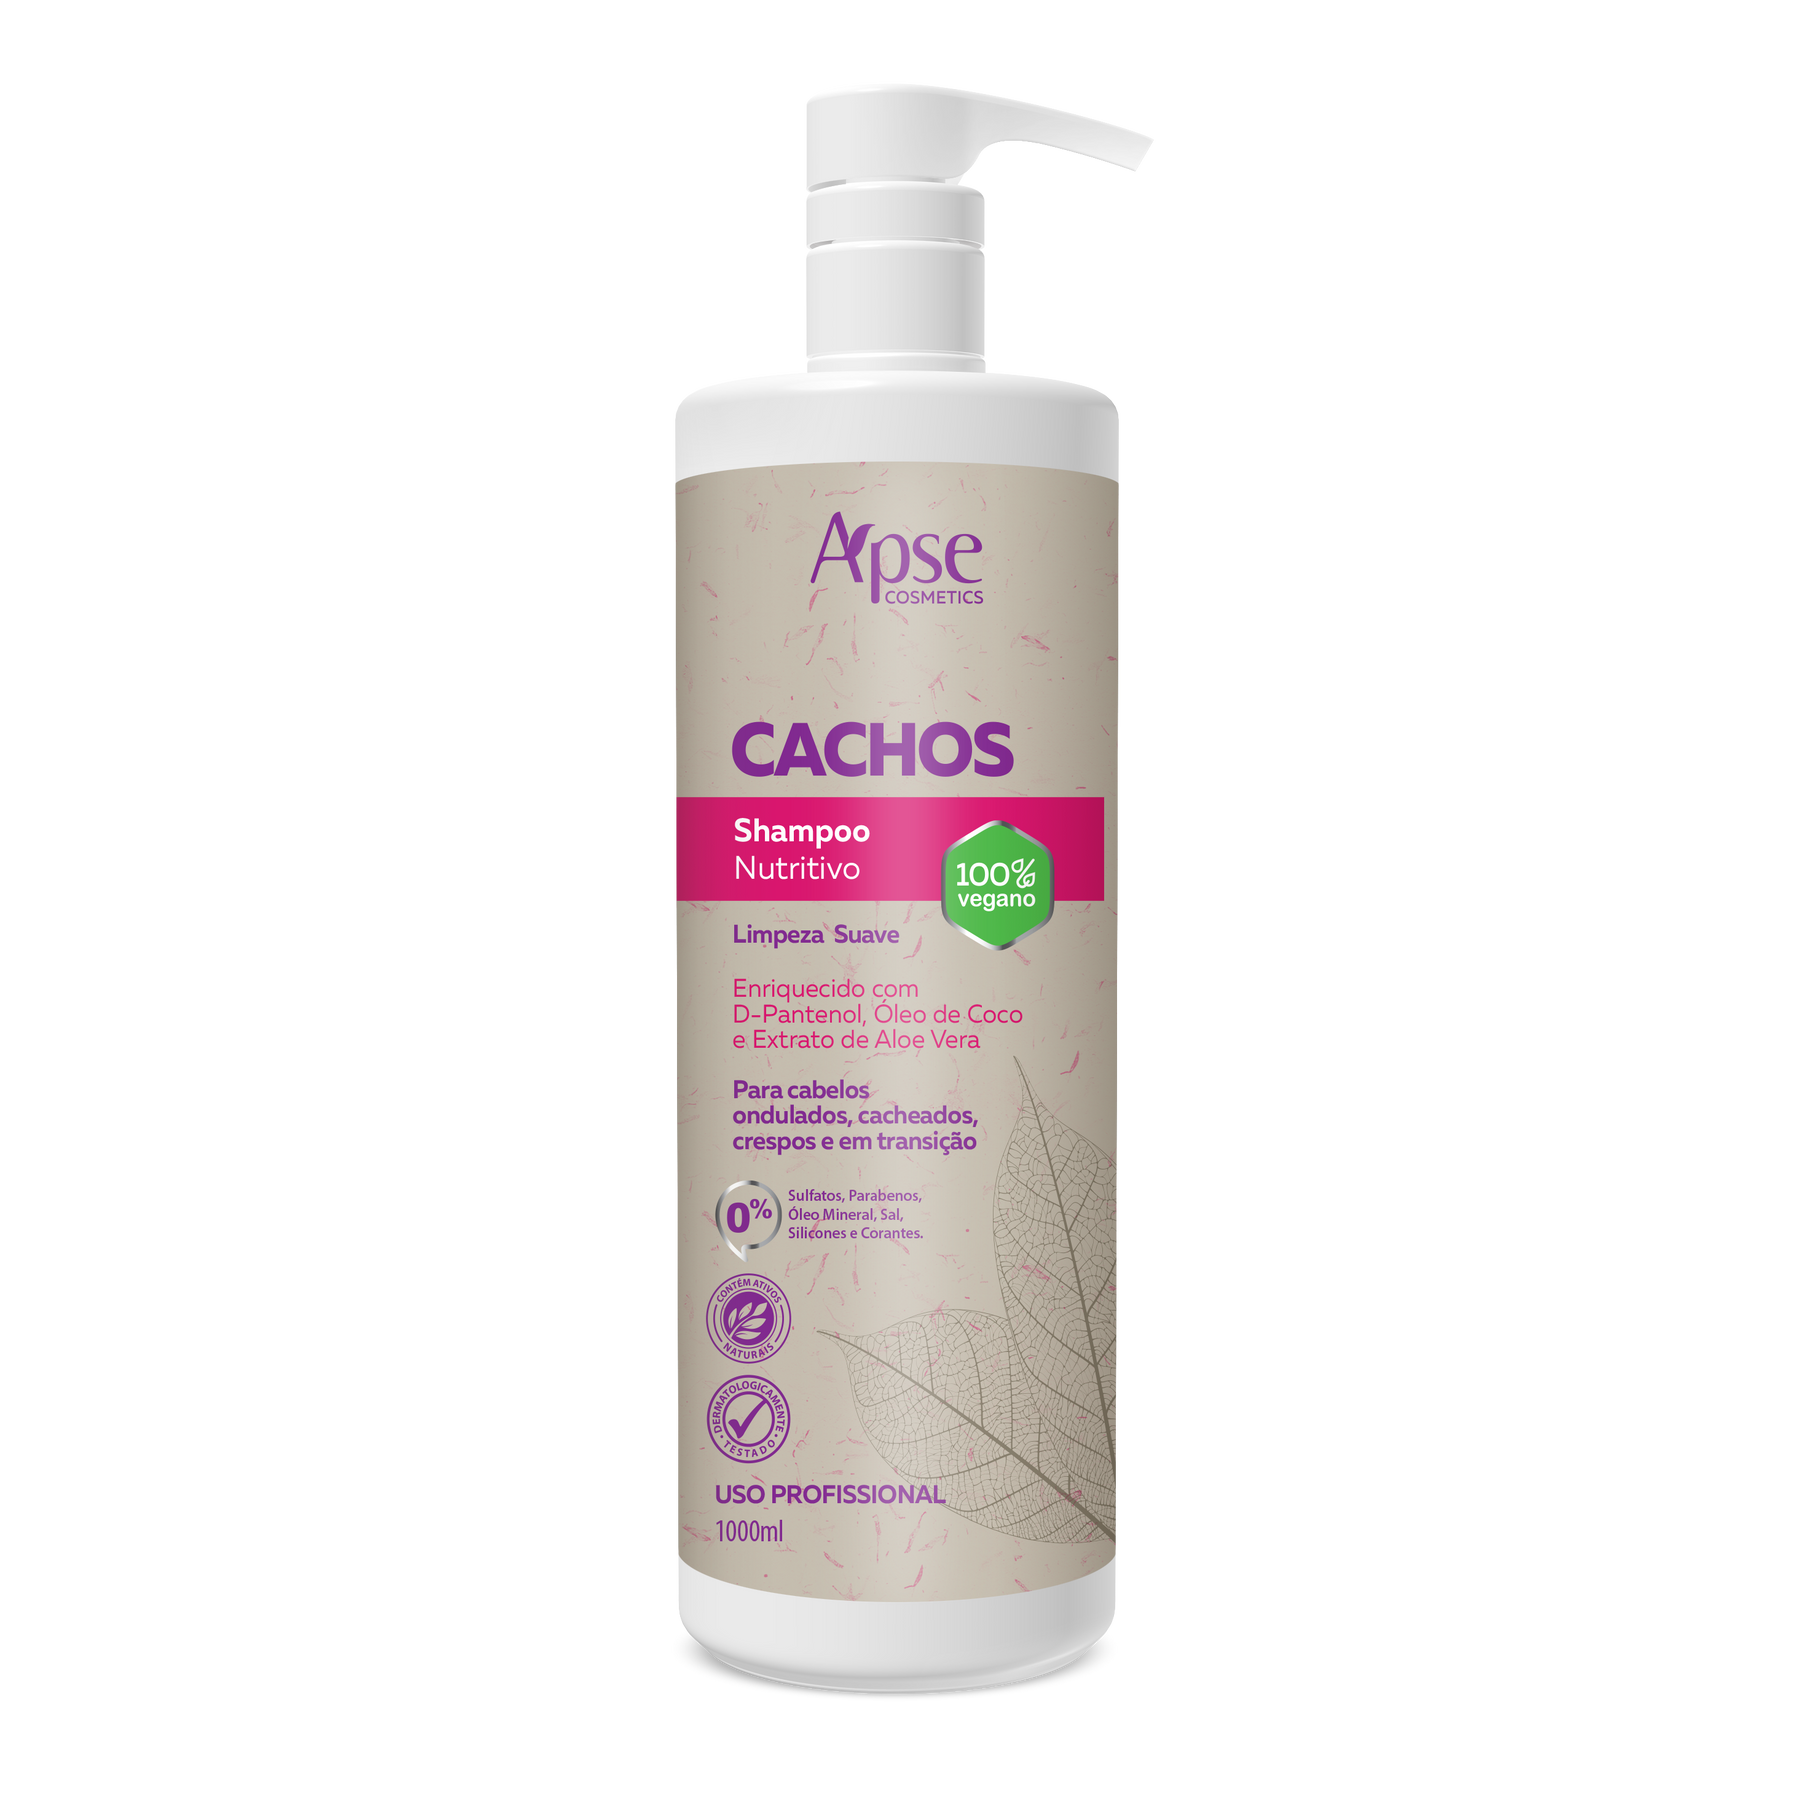 Apse Cosmetics Shampoo Apse Cosmetics - Nutritive Curls Shampoo 33.8 fl oz